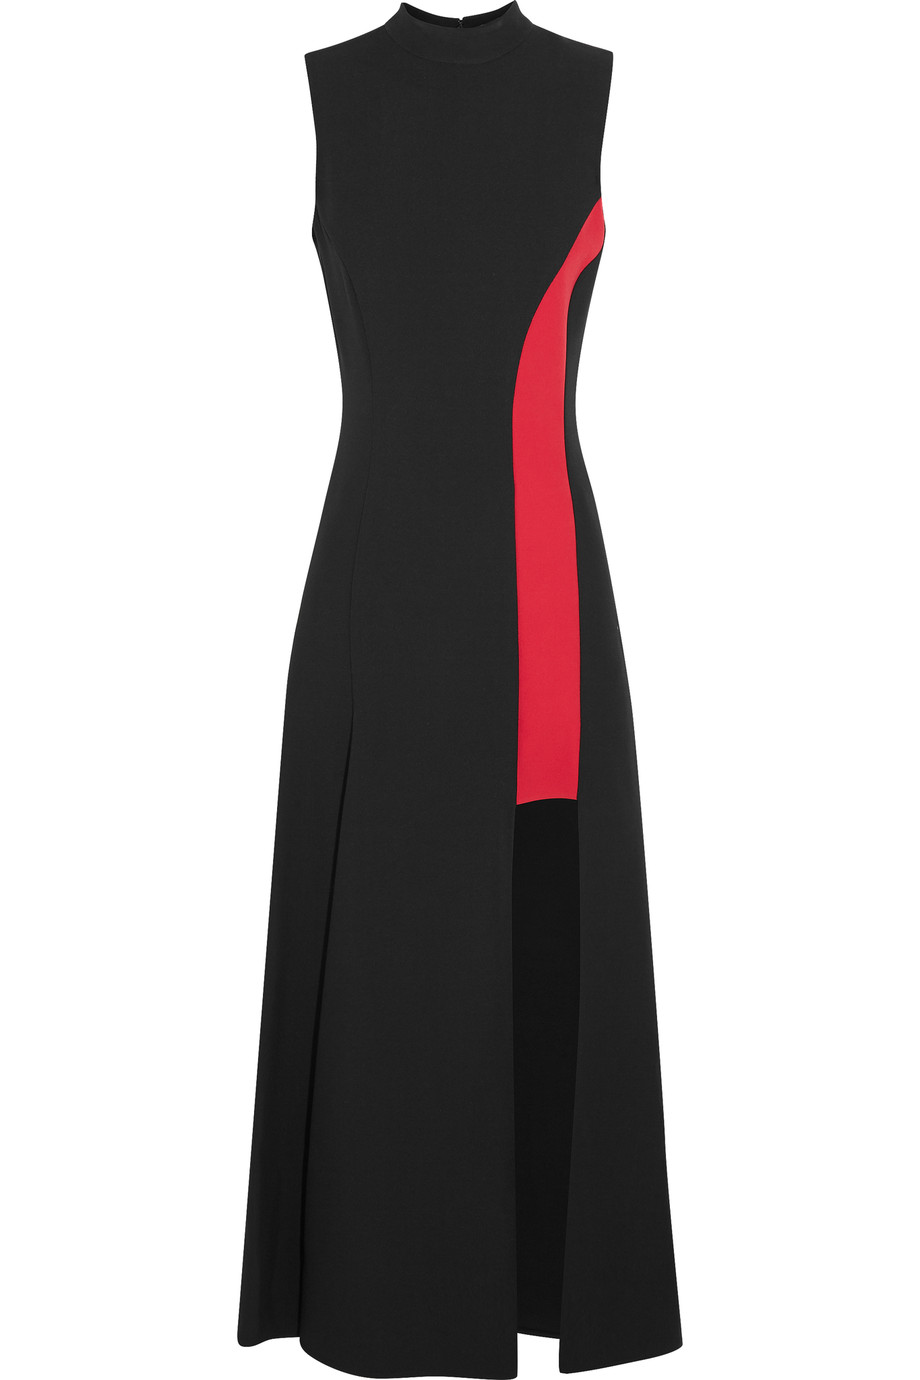 Versace Two-tone Crepe Dress | ModeSens